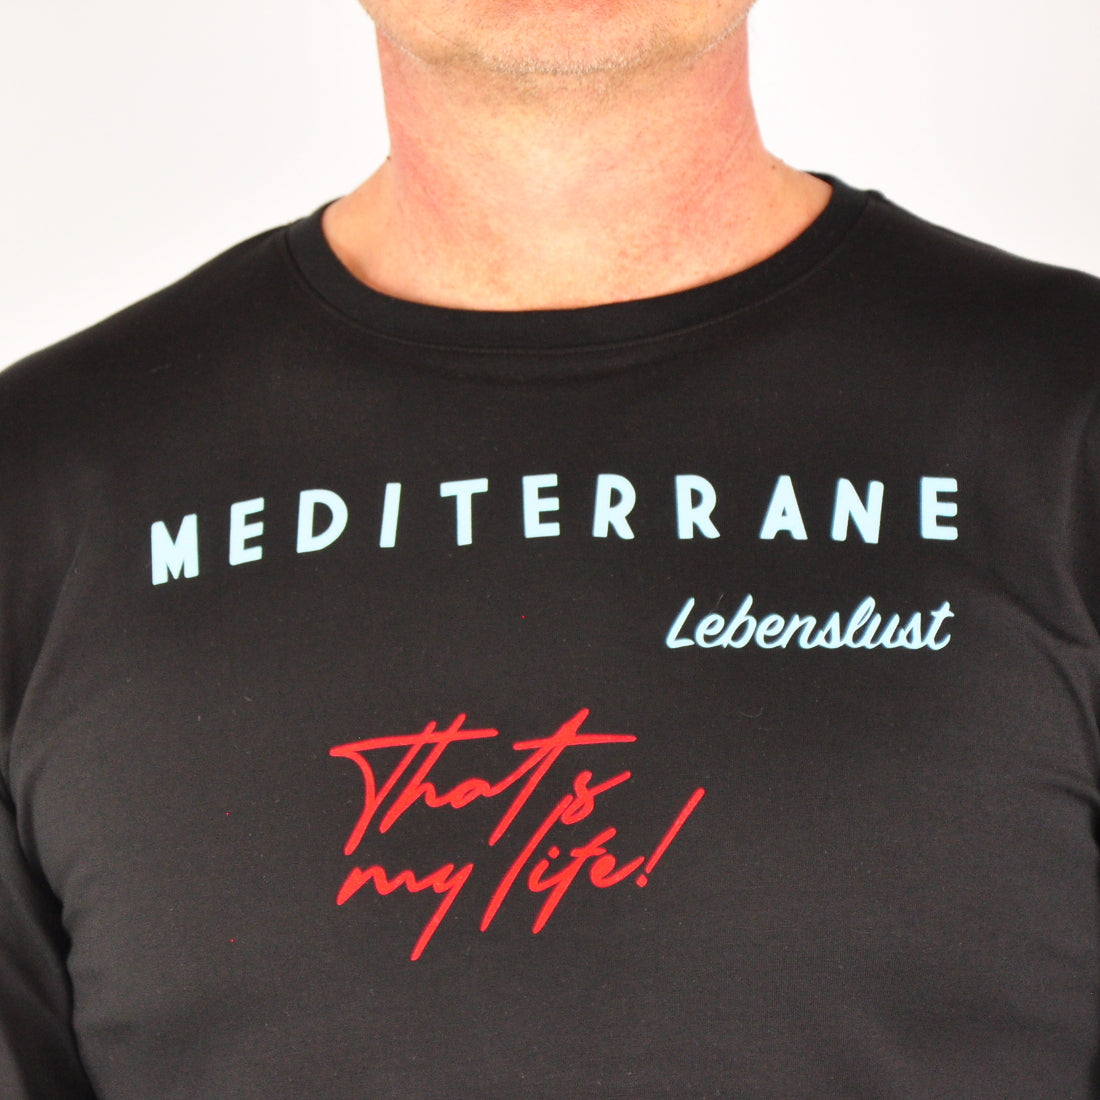 MEDITERRAN Men №3 | Langarm T-Shirt